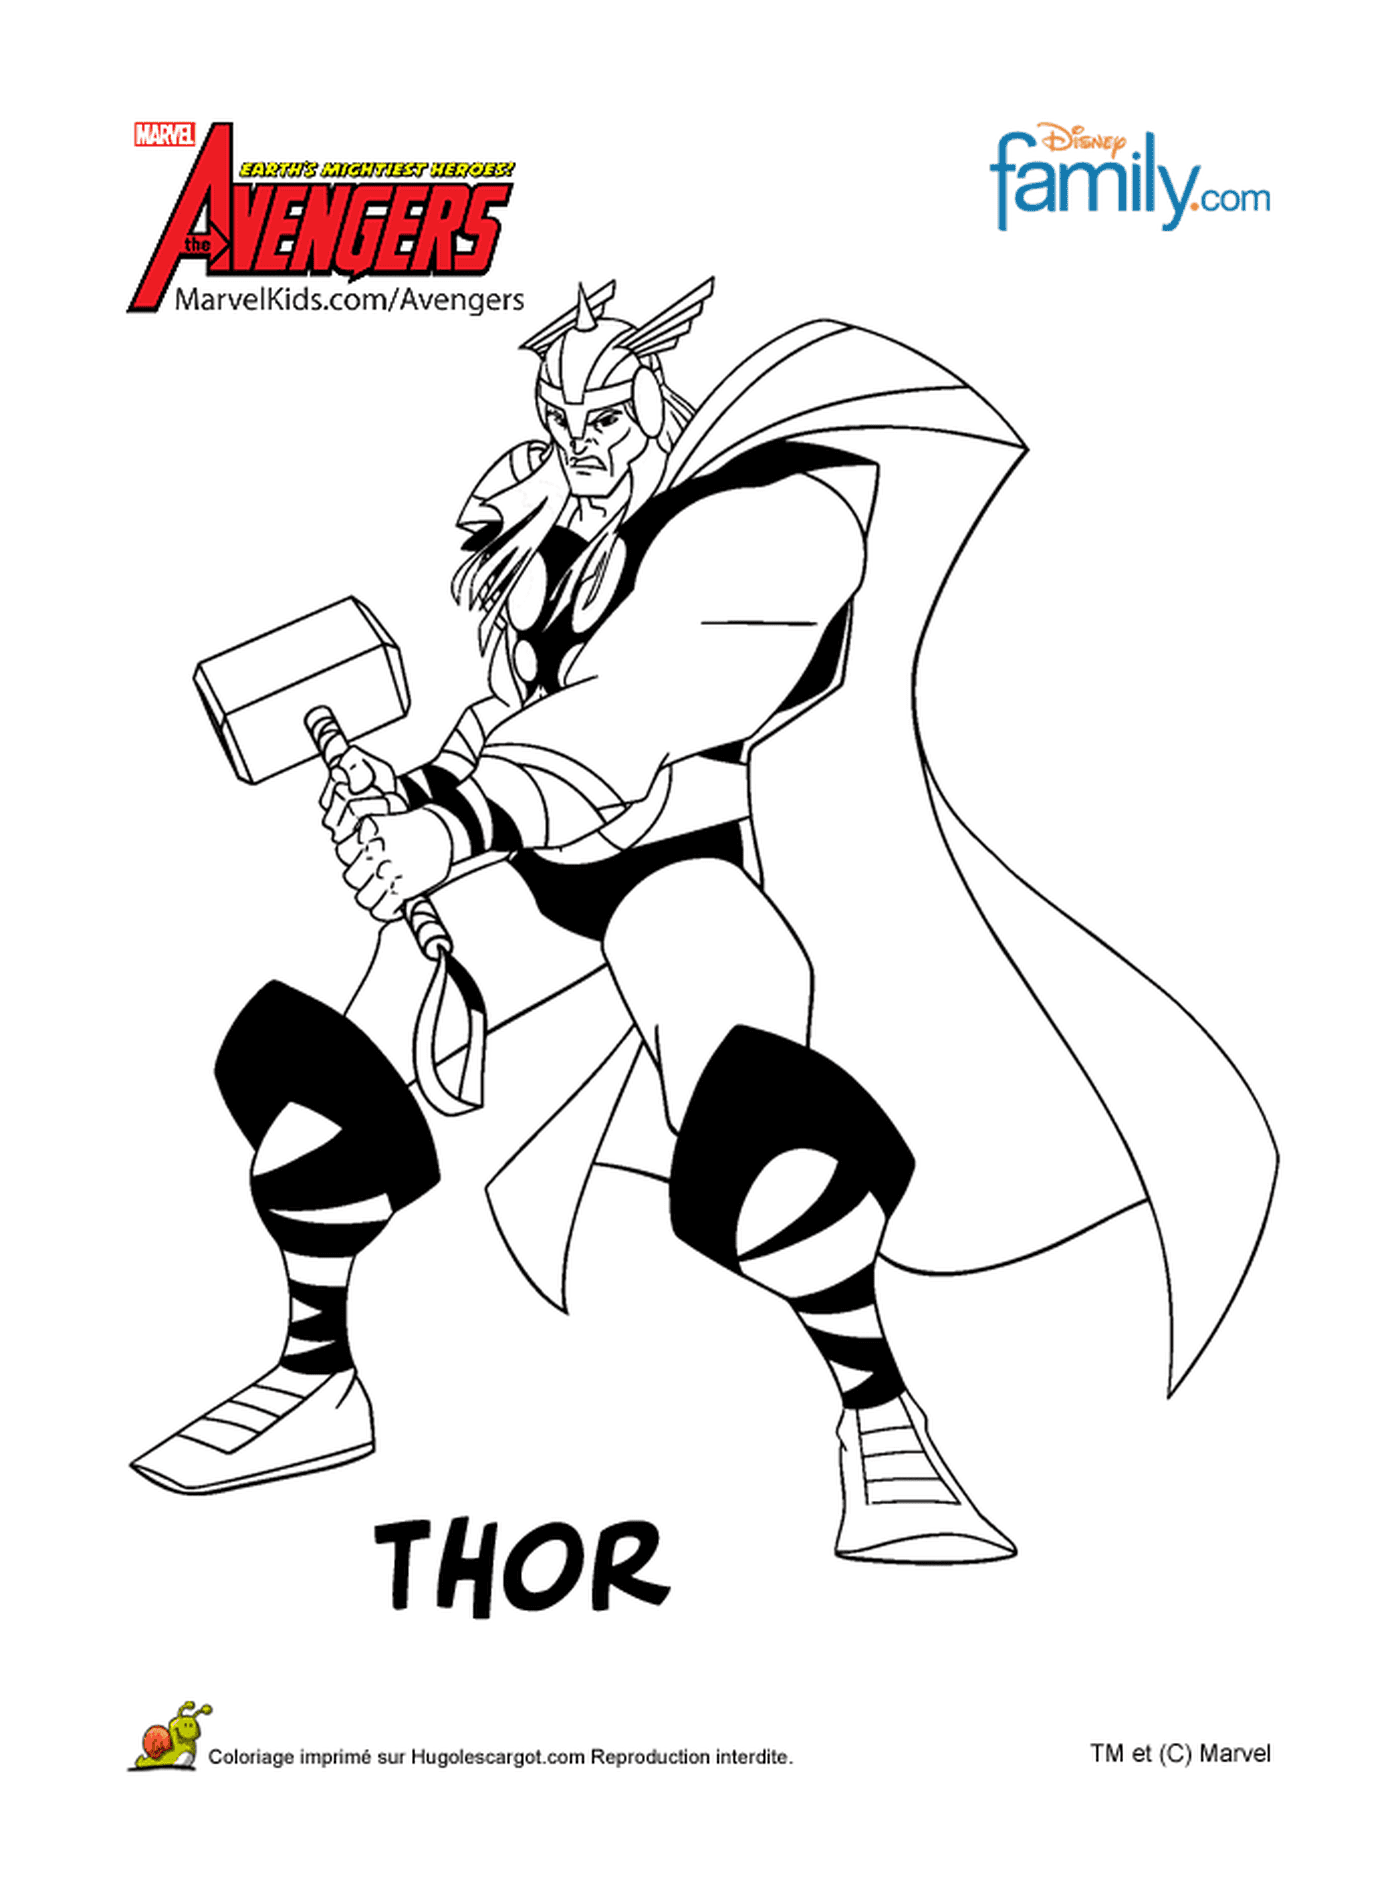   Thor tenant un marteau 